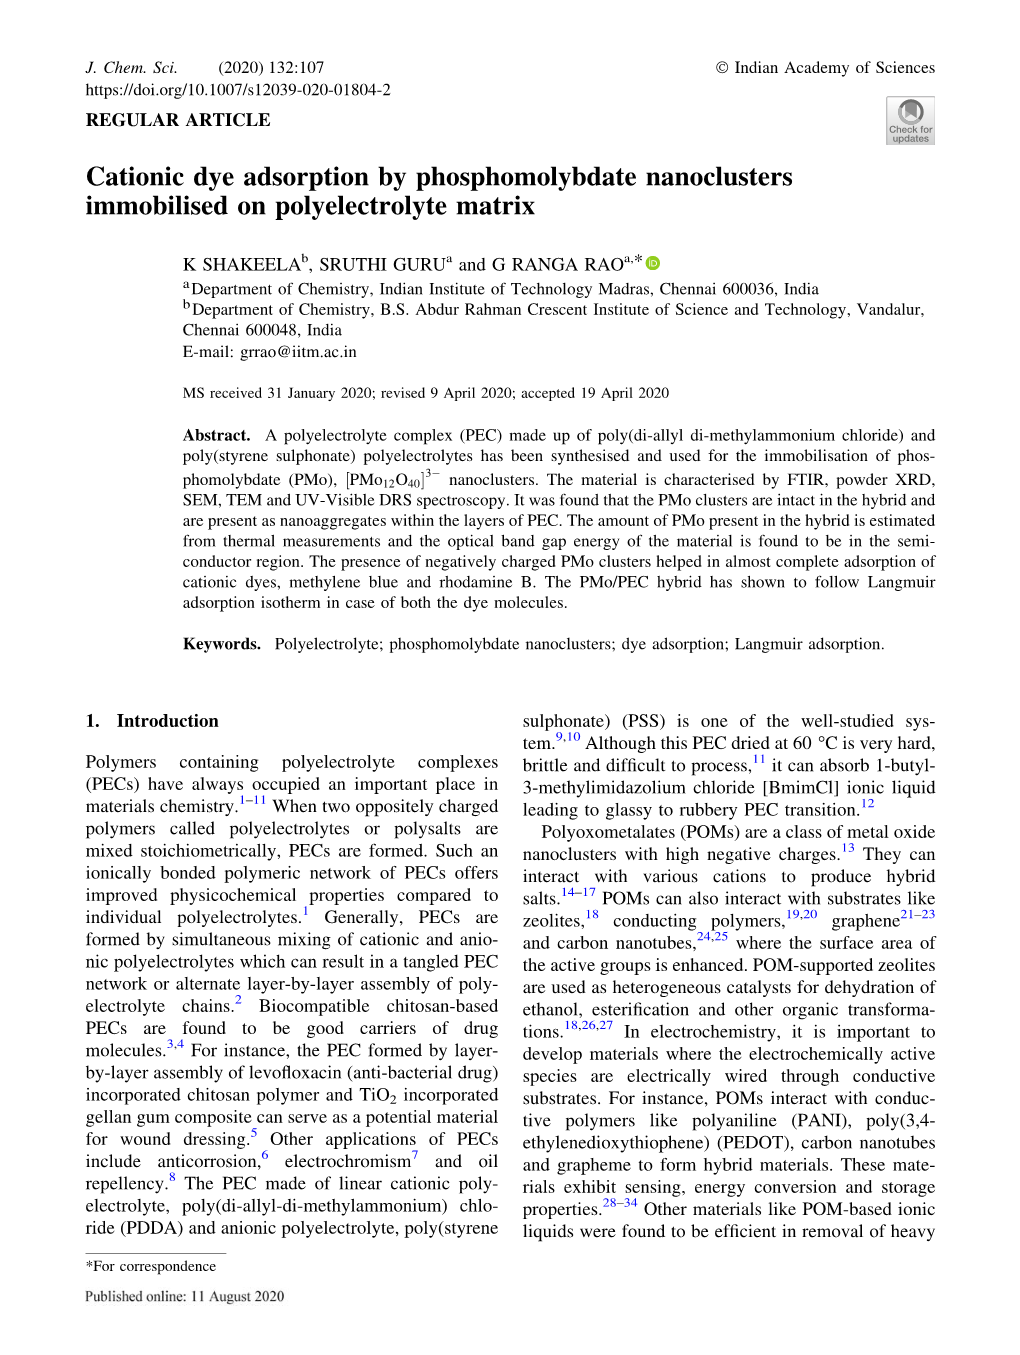 Cationic Dye Adsorption by Phosphomolybdate Nanoclusters Immobilised on Polyelectrolyte Matrix